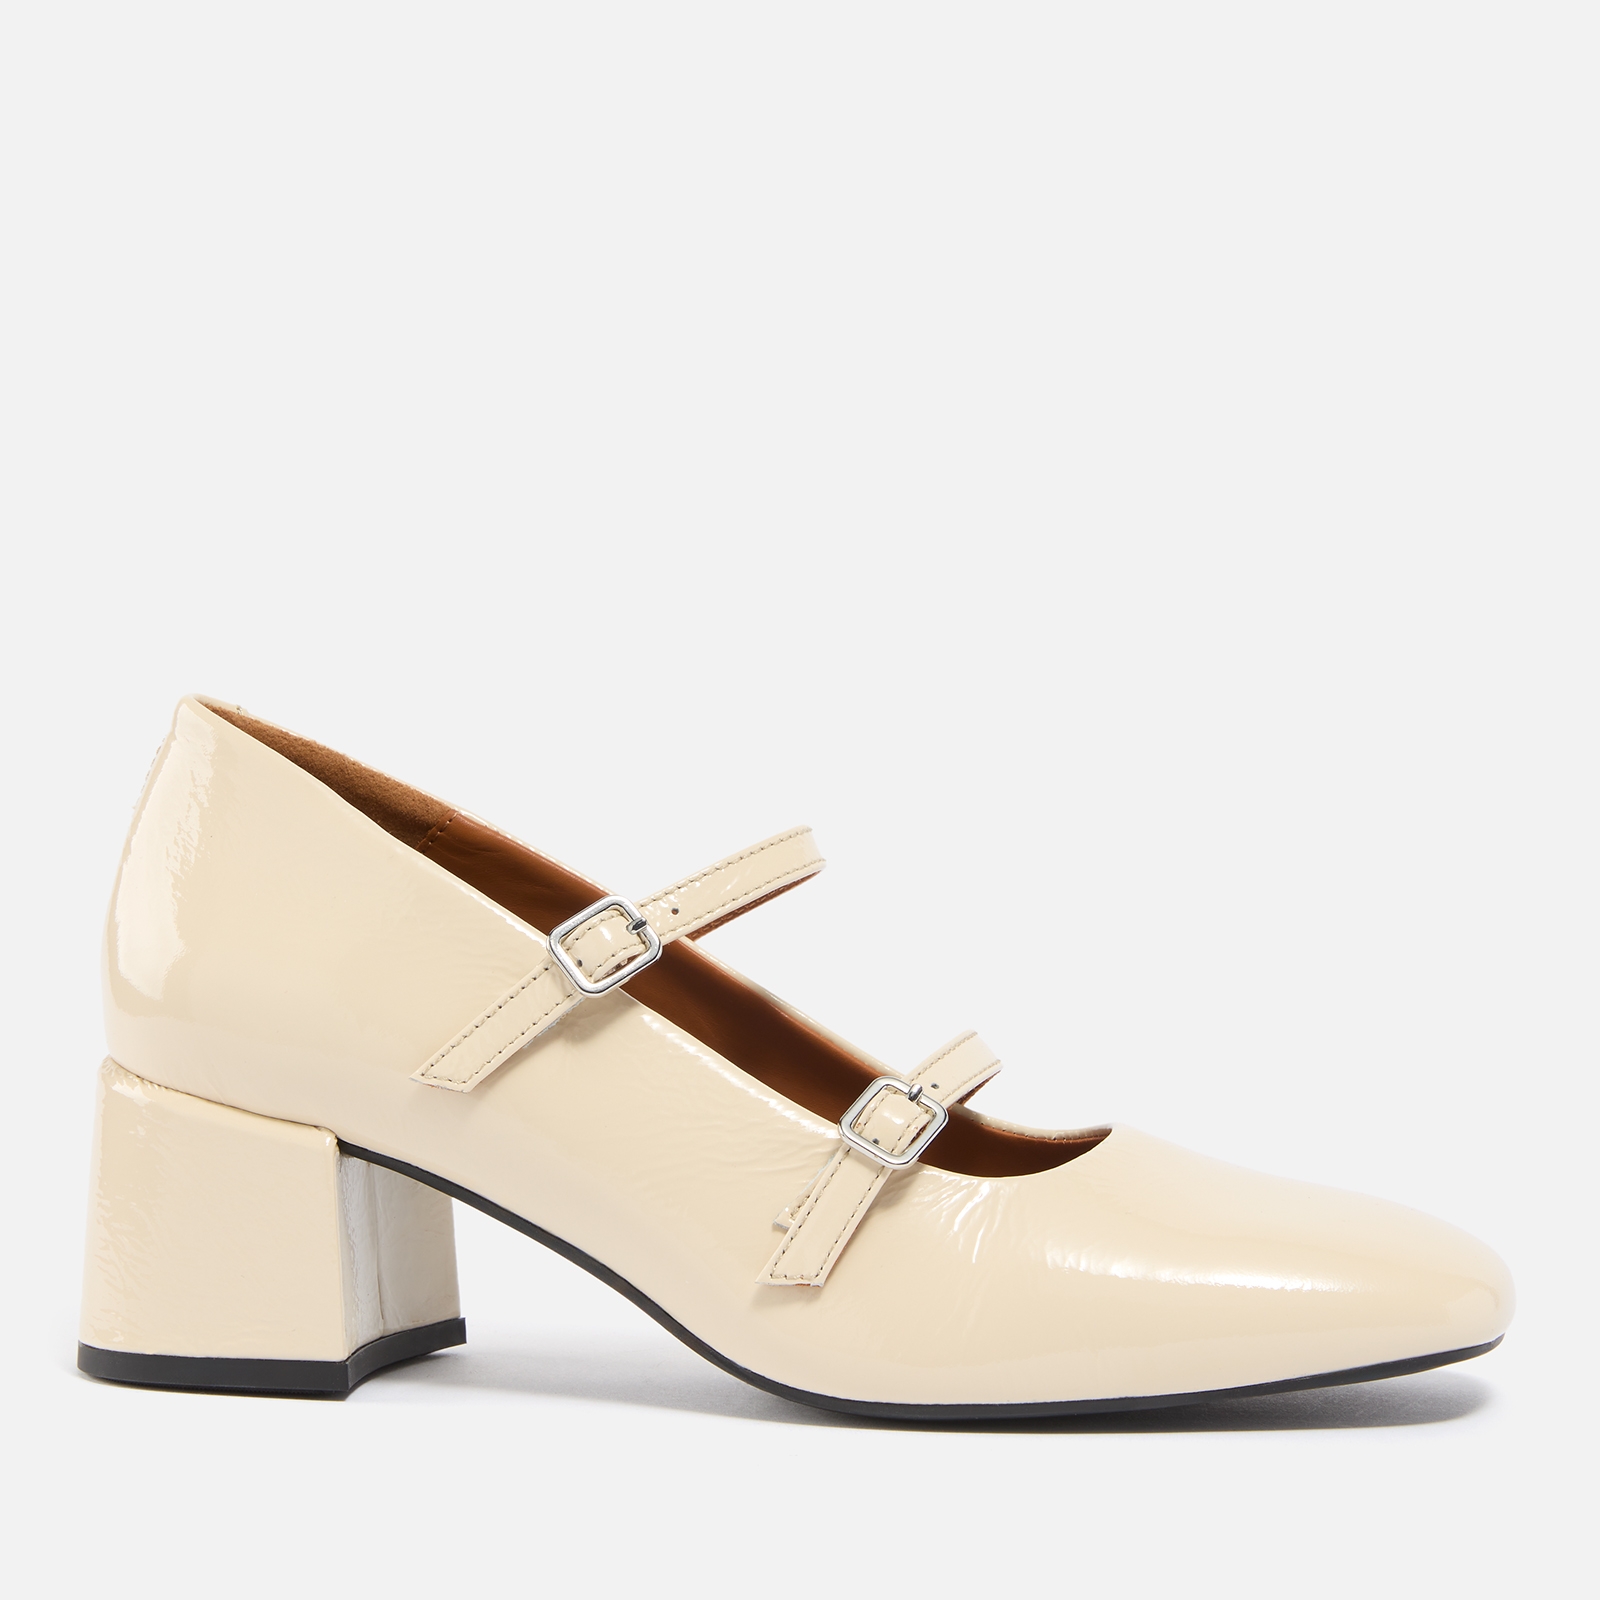 Vagabond Women's Adison Patent Leather Heeled Mary Jane Shoes - Cream